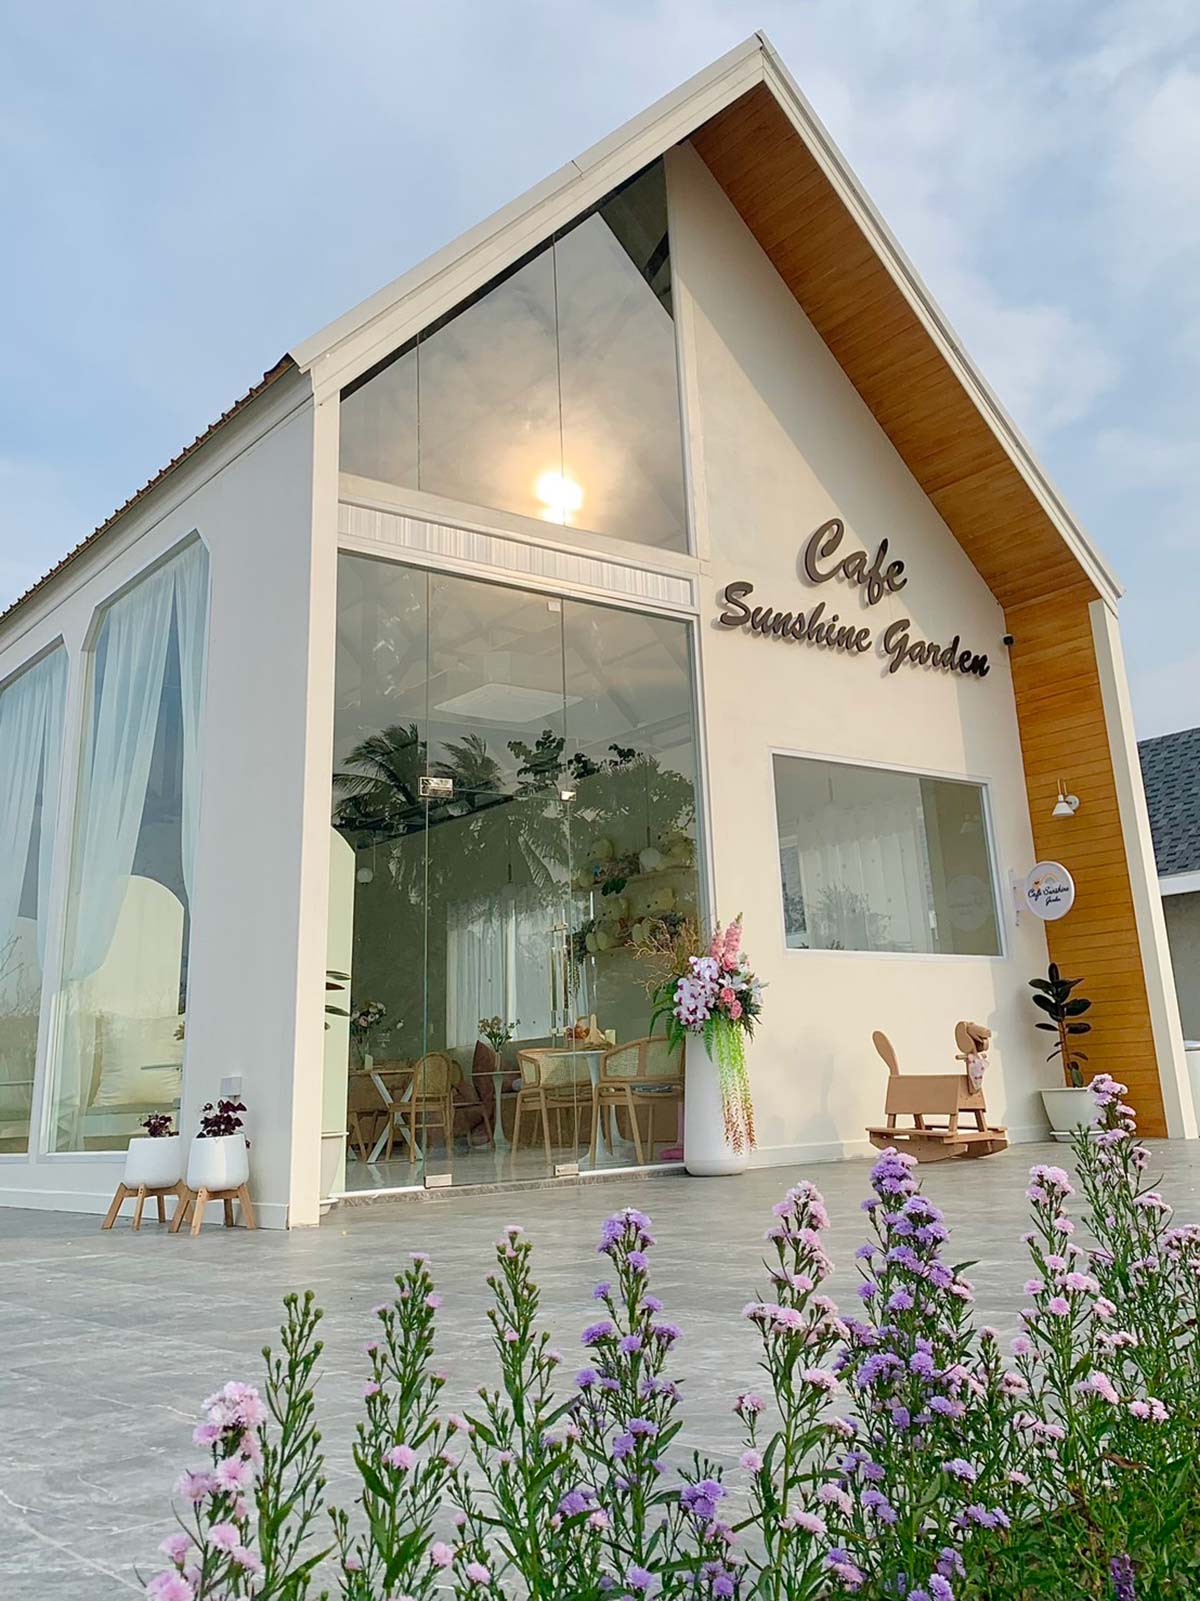 Cafe Sunshine Garden คาเฟ่ราชบุรี เปิดใหม่สุดคิวท์ ใน อ.โพธาราม